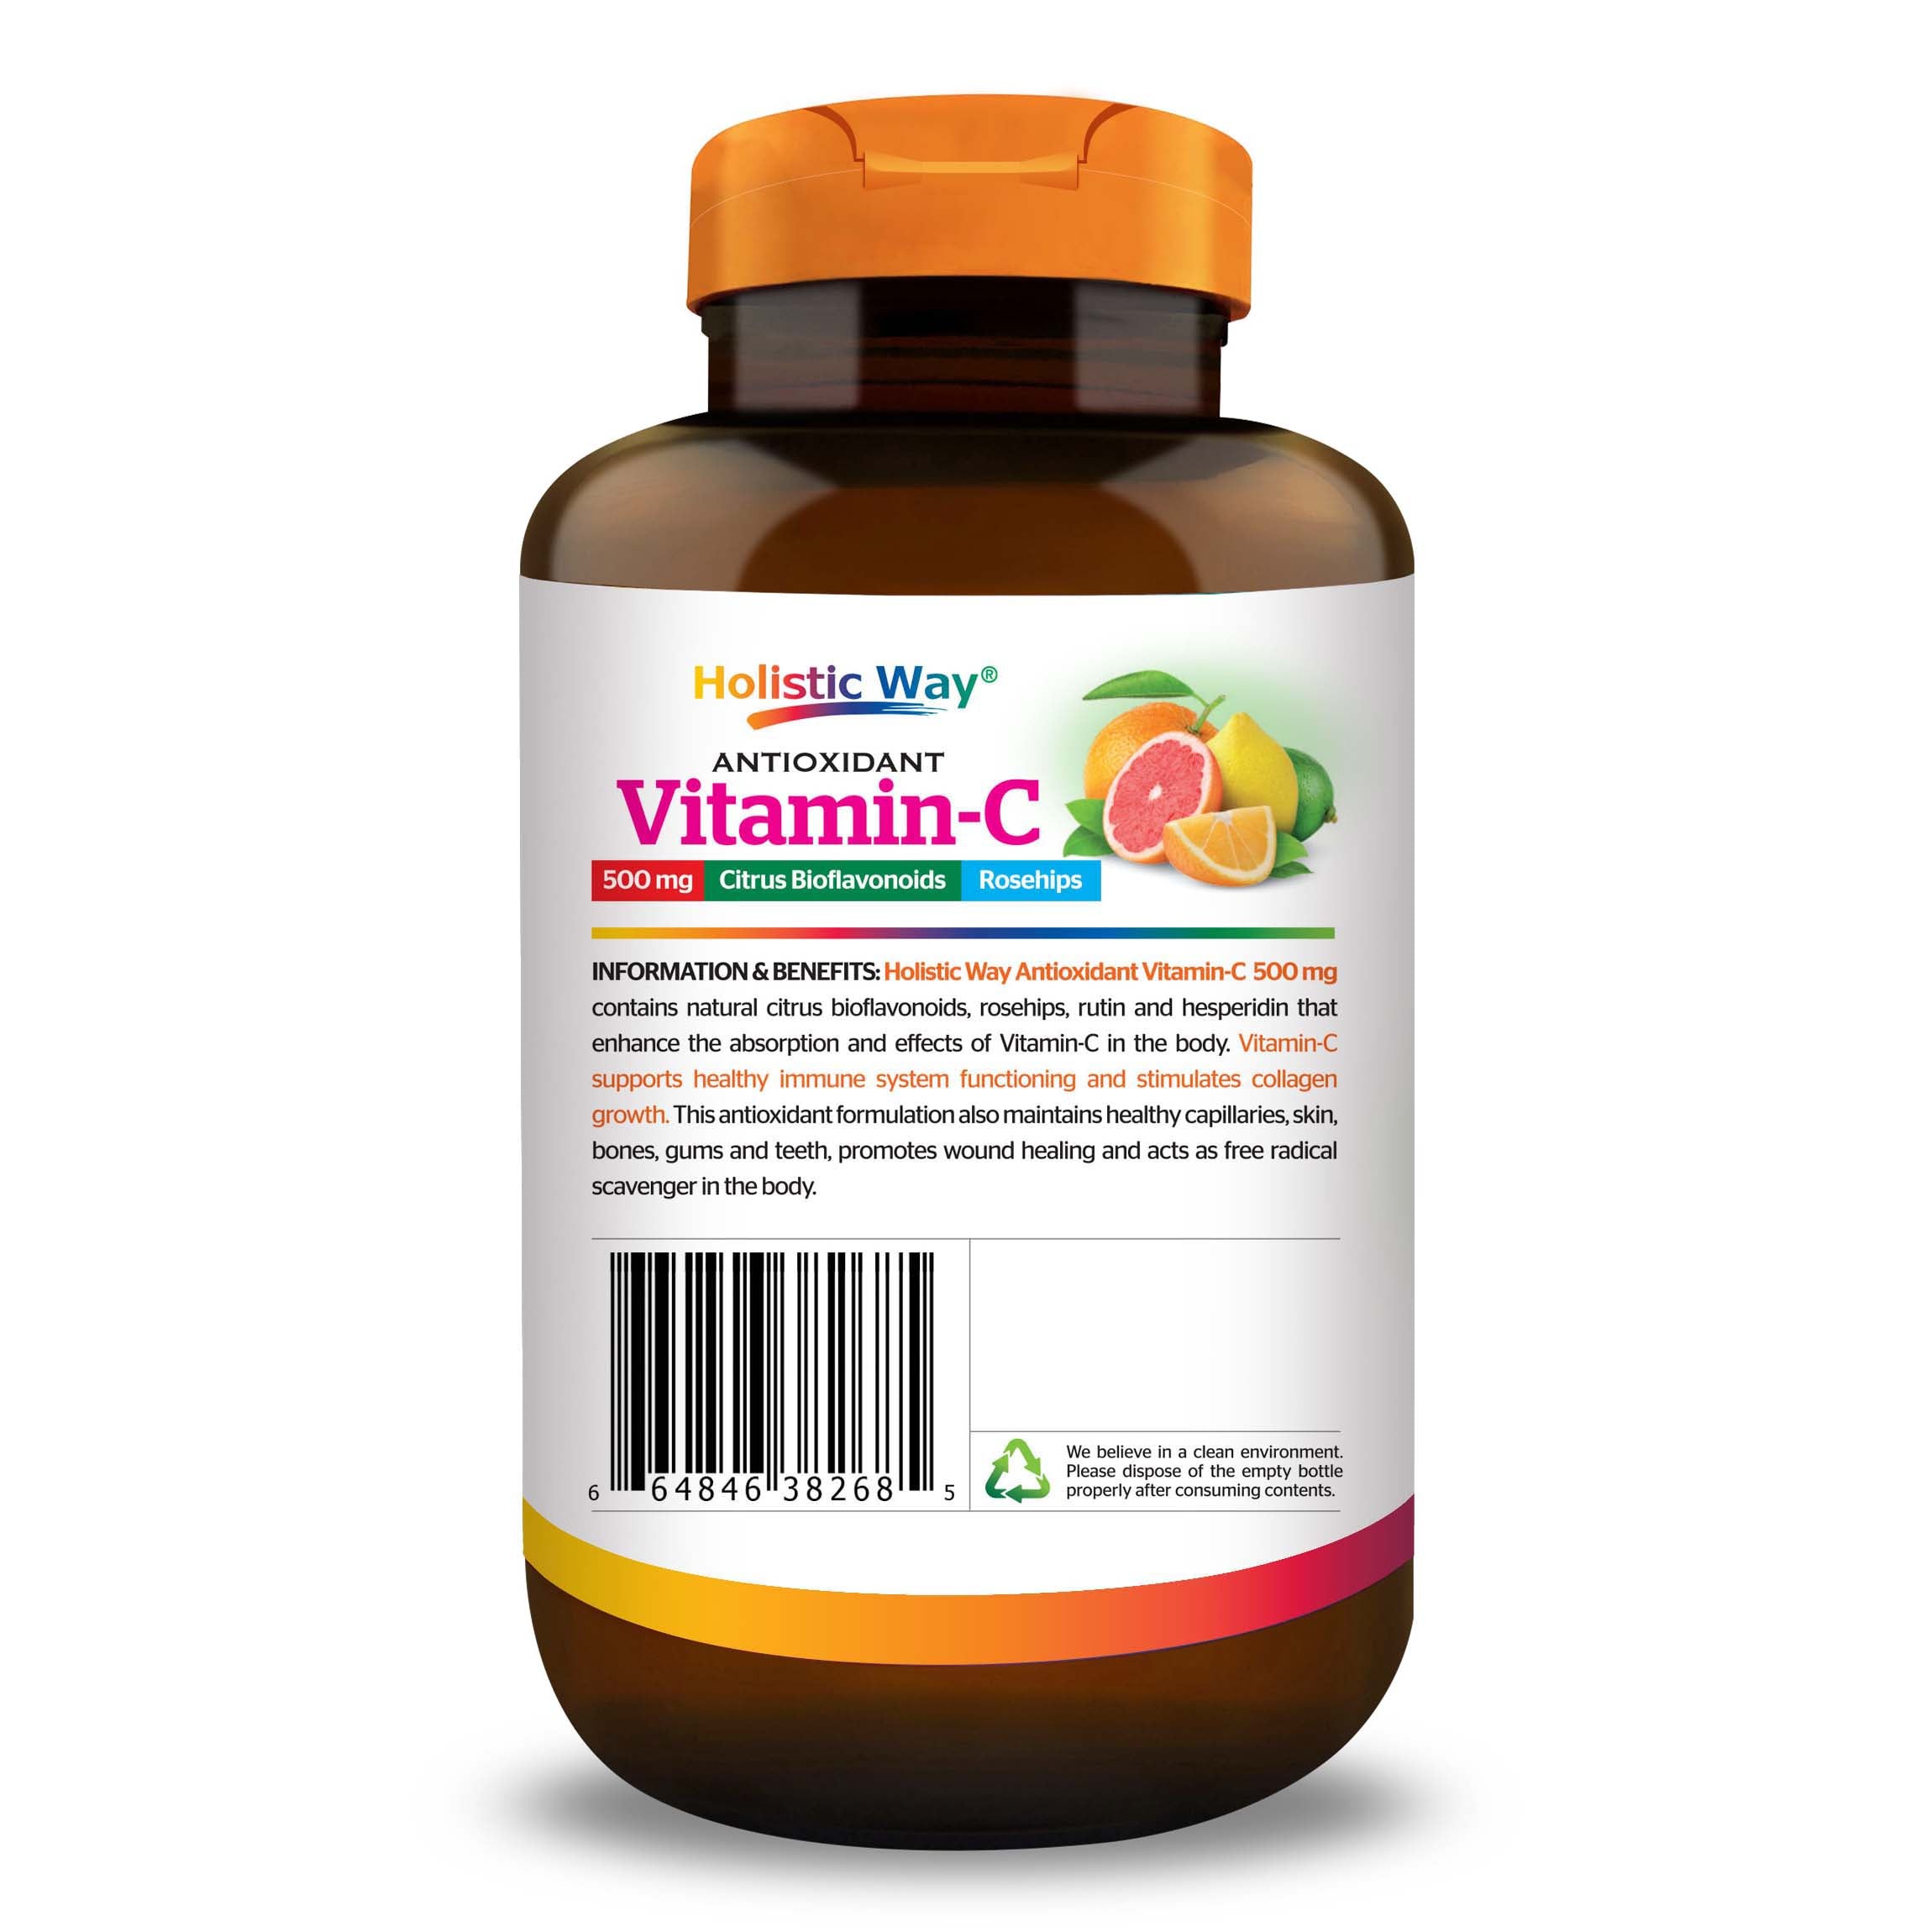 Holistic Way Antioxidant Vitamin-C 500mg (100 Caplets)